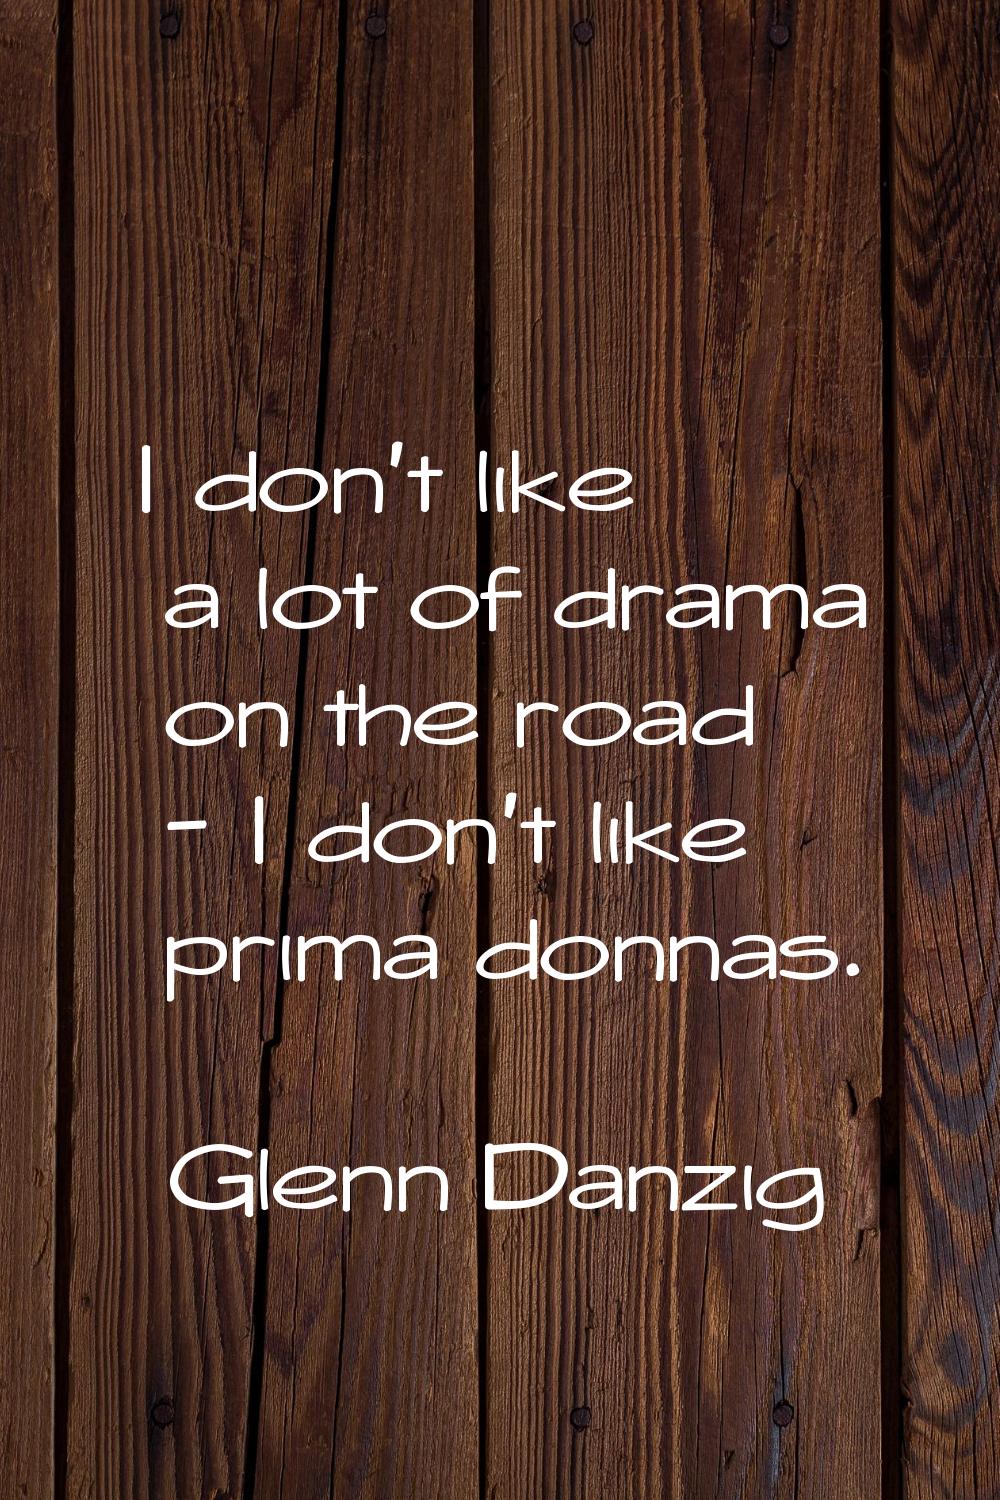 I don't like a lot of drama on the road - I don't like prima donnas.